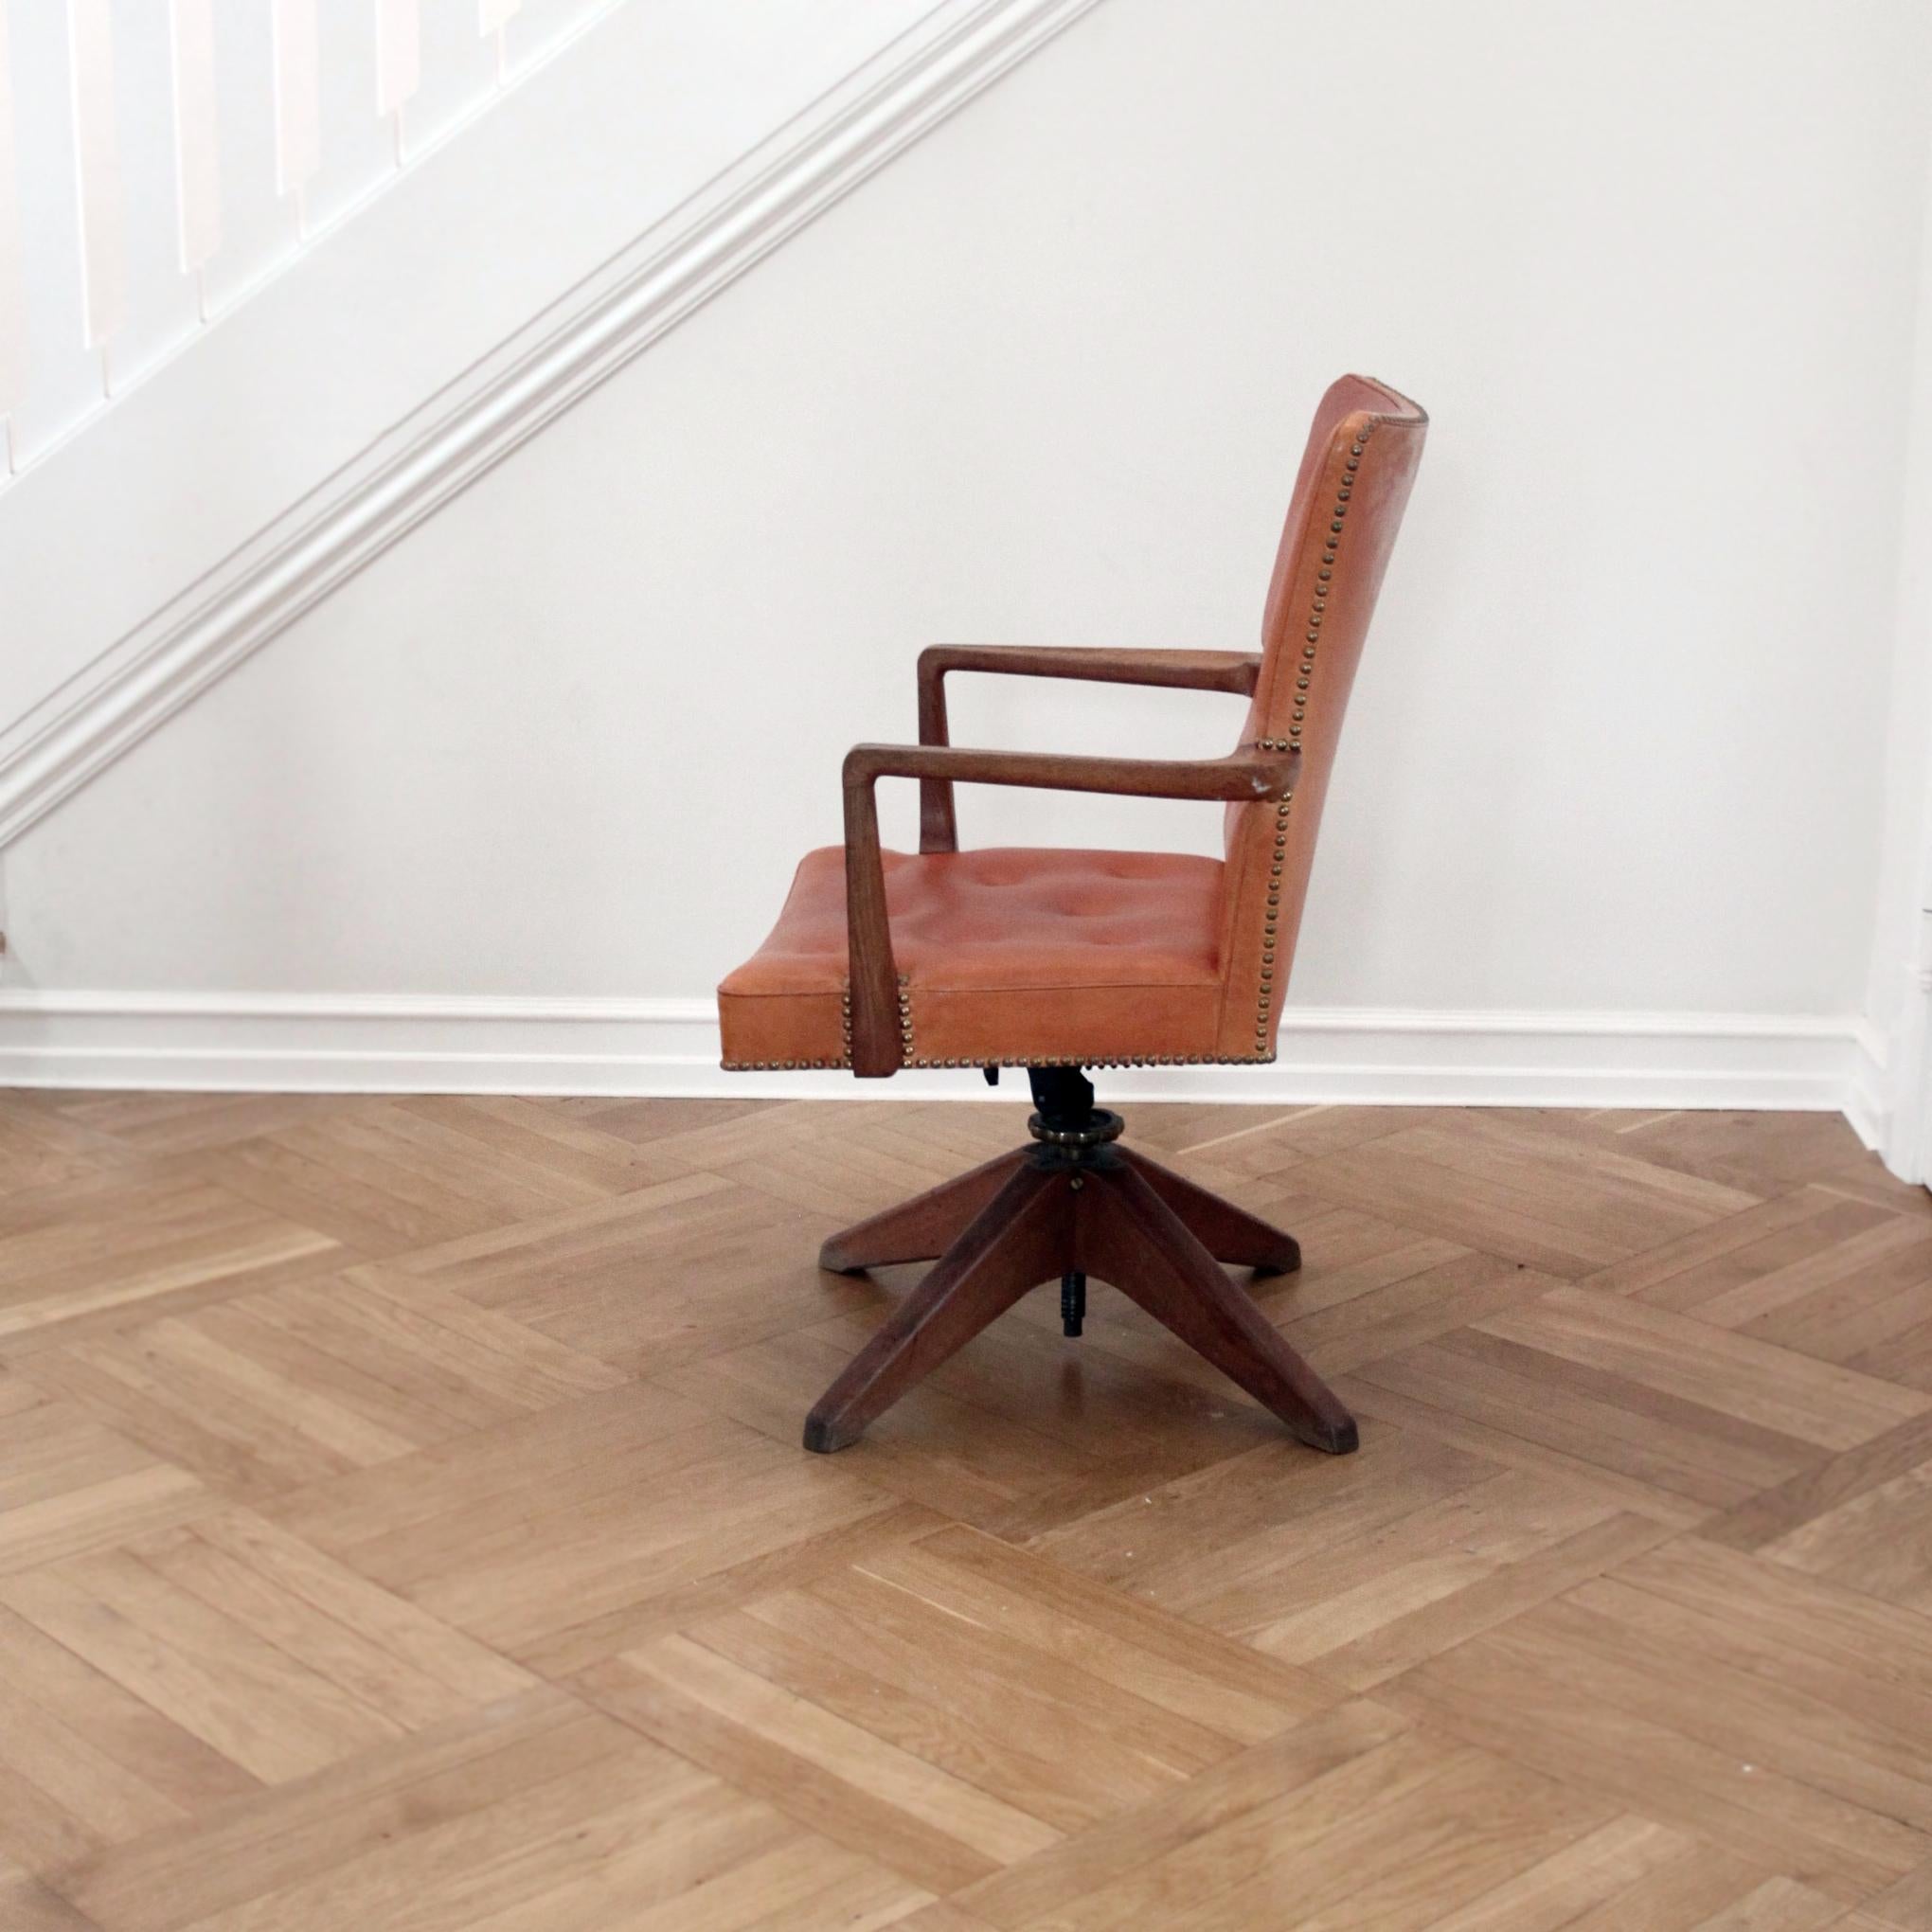 Scandinavian Modern Rare Executive Desk Chair in Walnut, Brass and Leather, Palle Suenson, 1940s For Sale